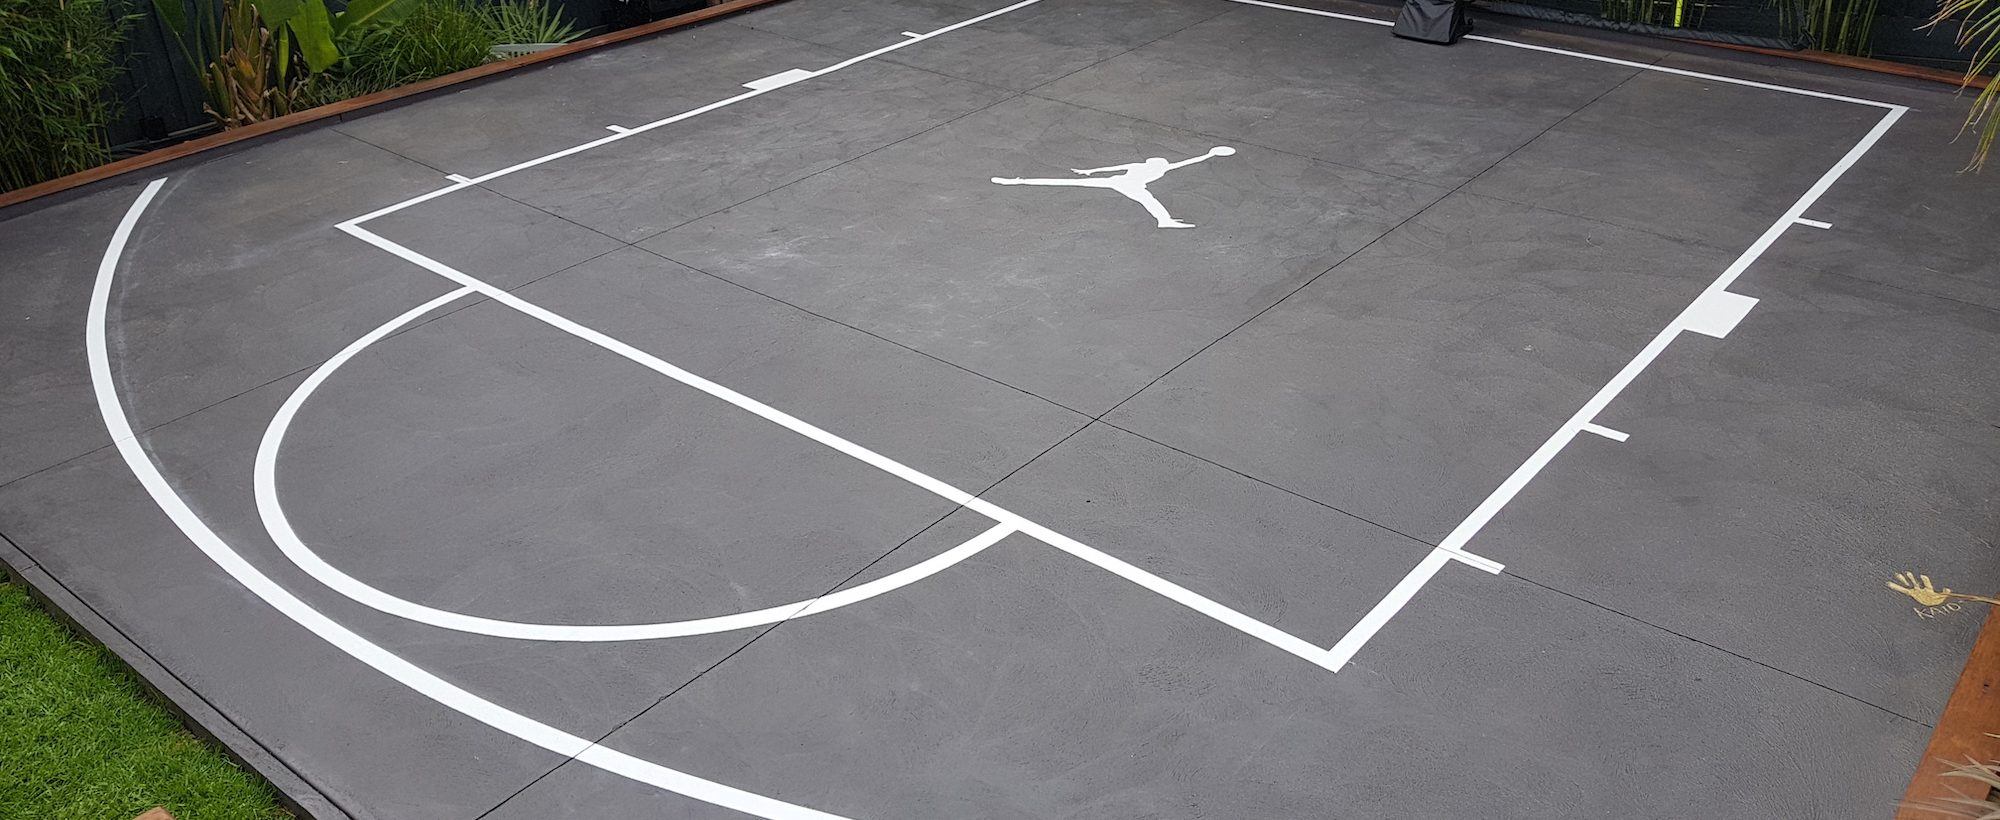 Home-Outside-Basketball-Line-Marking